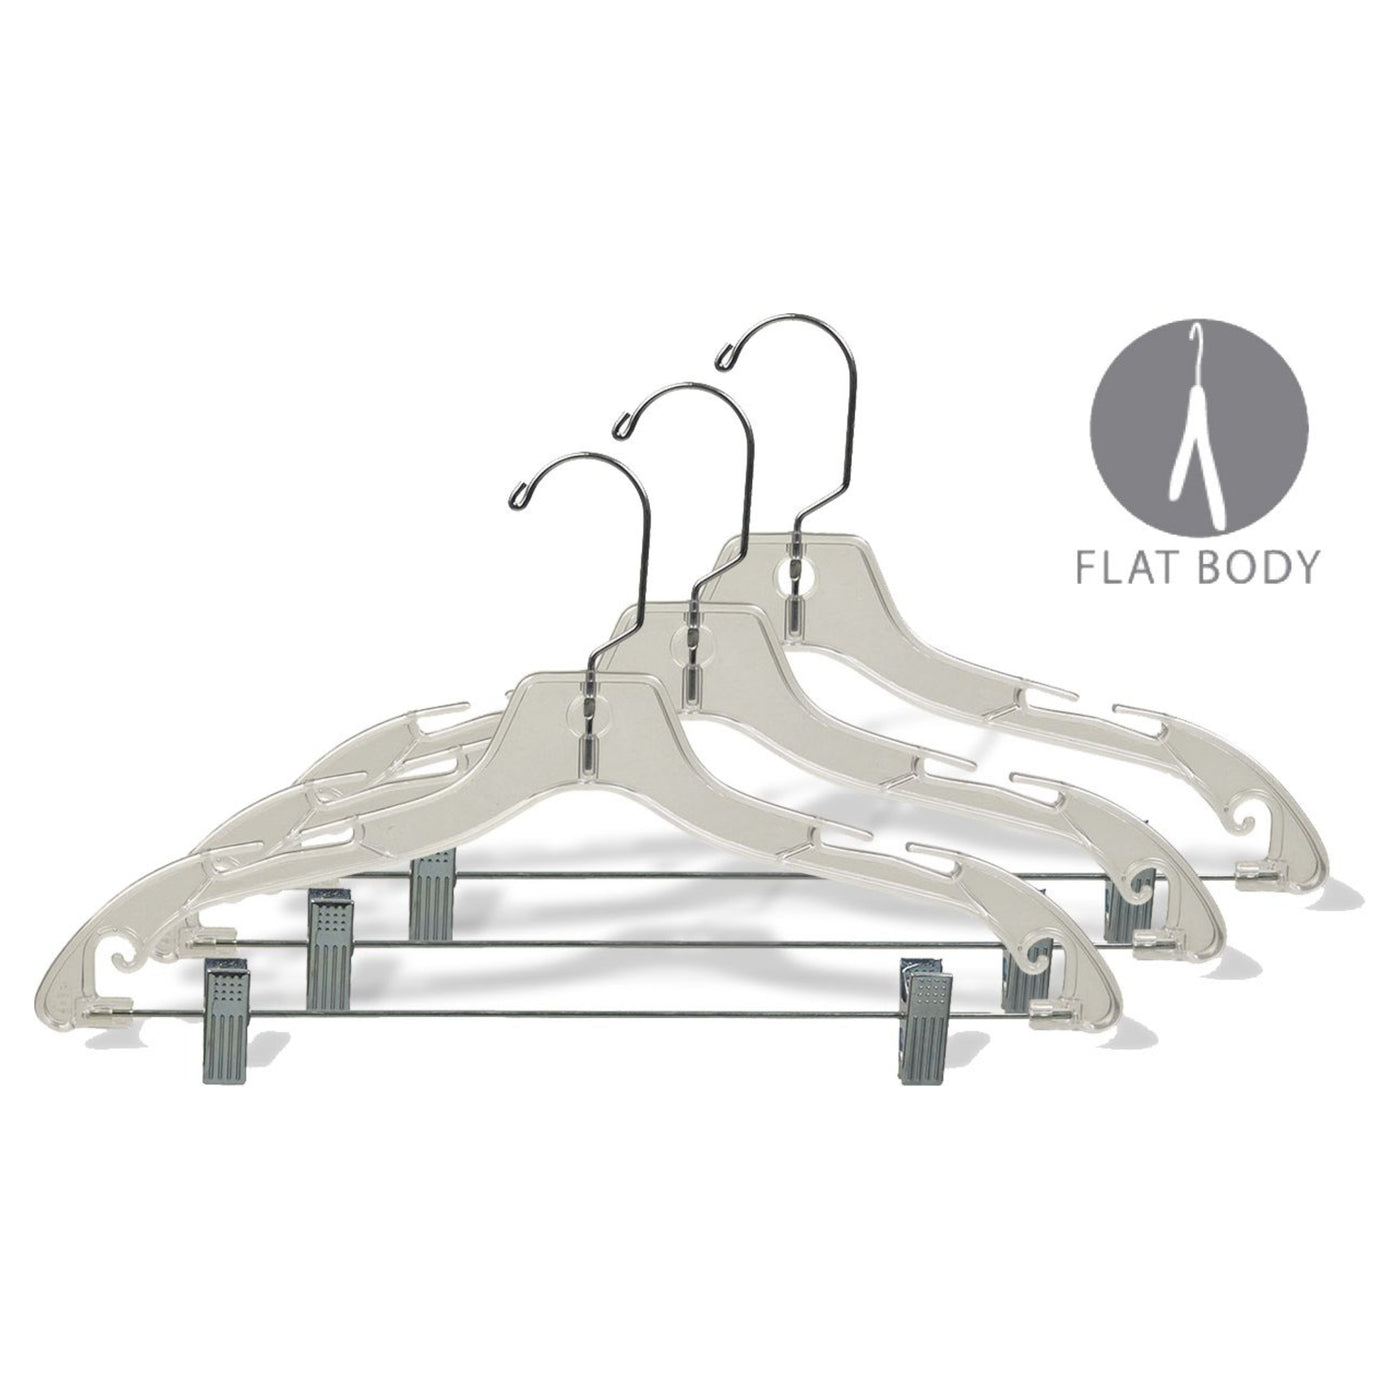 Plastic Clothes Hangers - Clear Plastic Hangers - Black Plastic Hangers